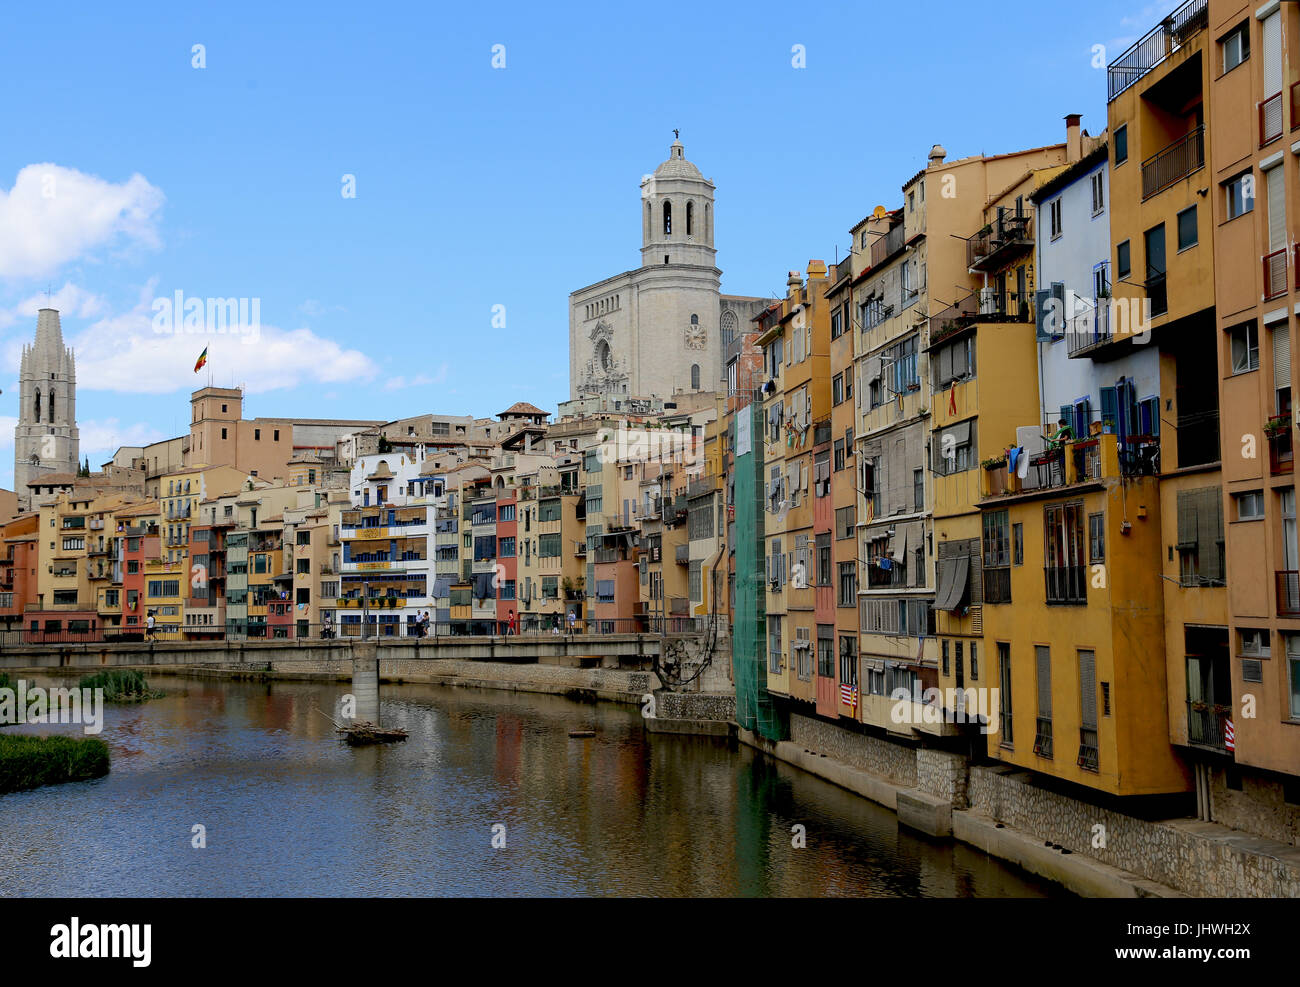 Girona, case e si affaccia sul fiume Onyar. Vista recenti, 2017. Vista pittoresca. Dalle facciate colorate, la Cattedrale e San Feliu chiesa in background. Foto Stock